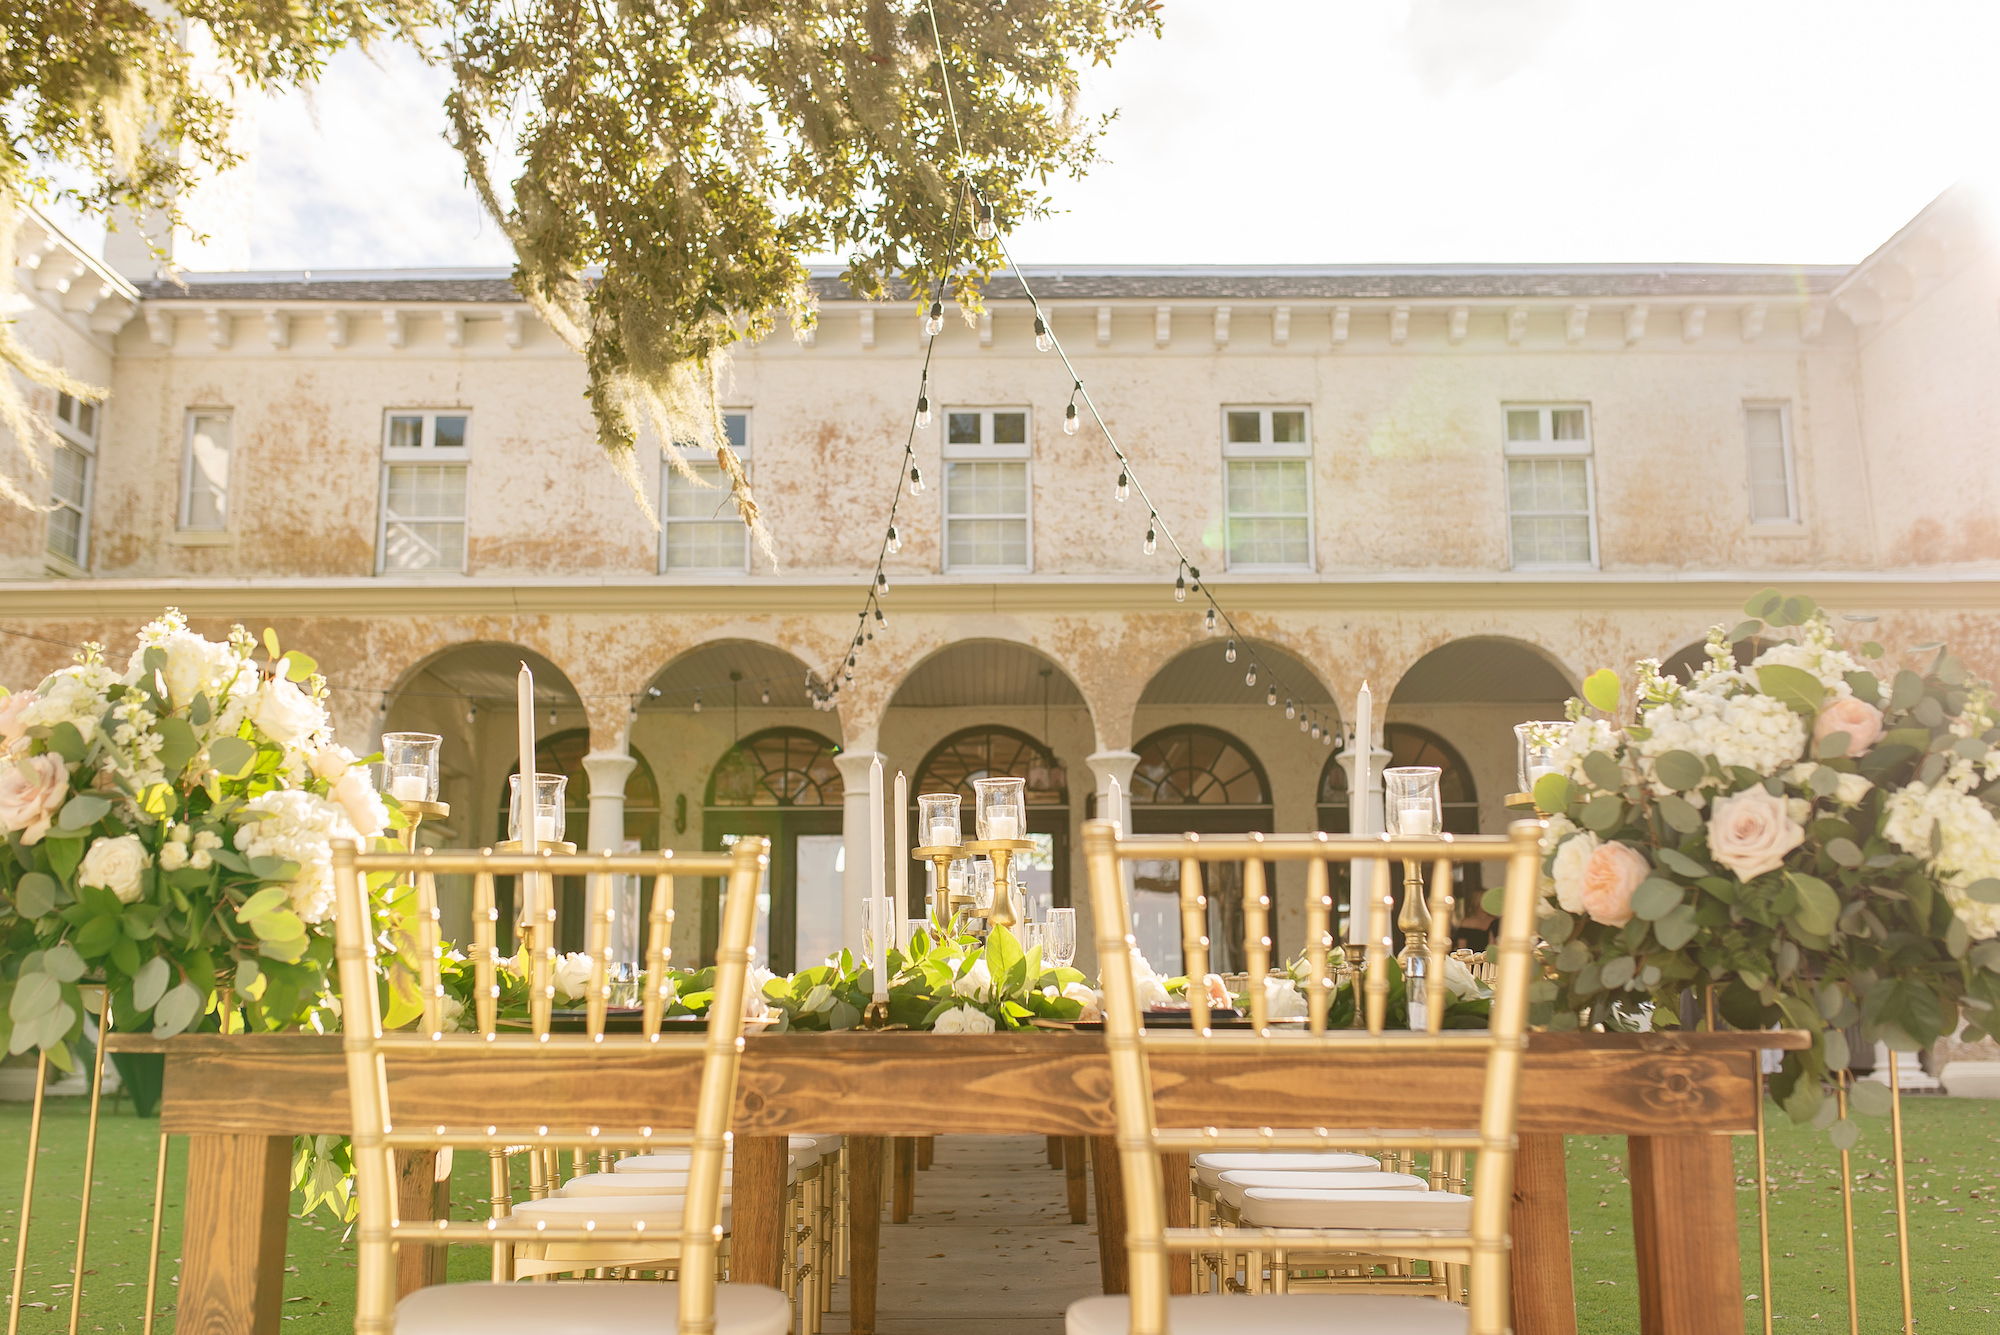 Italian-Inspired Garden Wedding Decor Inspiration | Elegant Sweetheart Table | Gold Chiavari Chair Italian Wedding Reception Inspiration | Central Florida Venue Bella Cosa